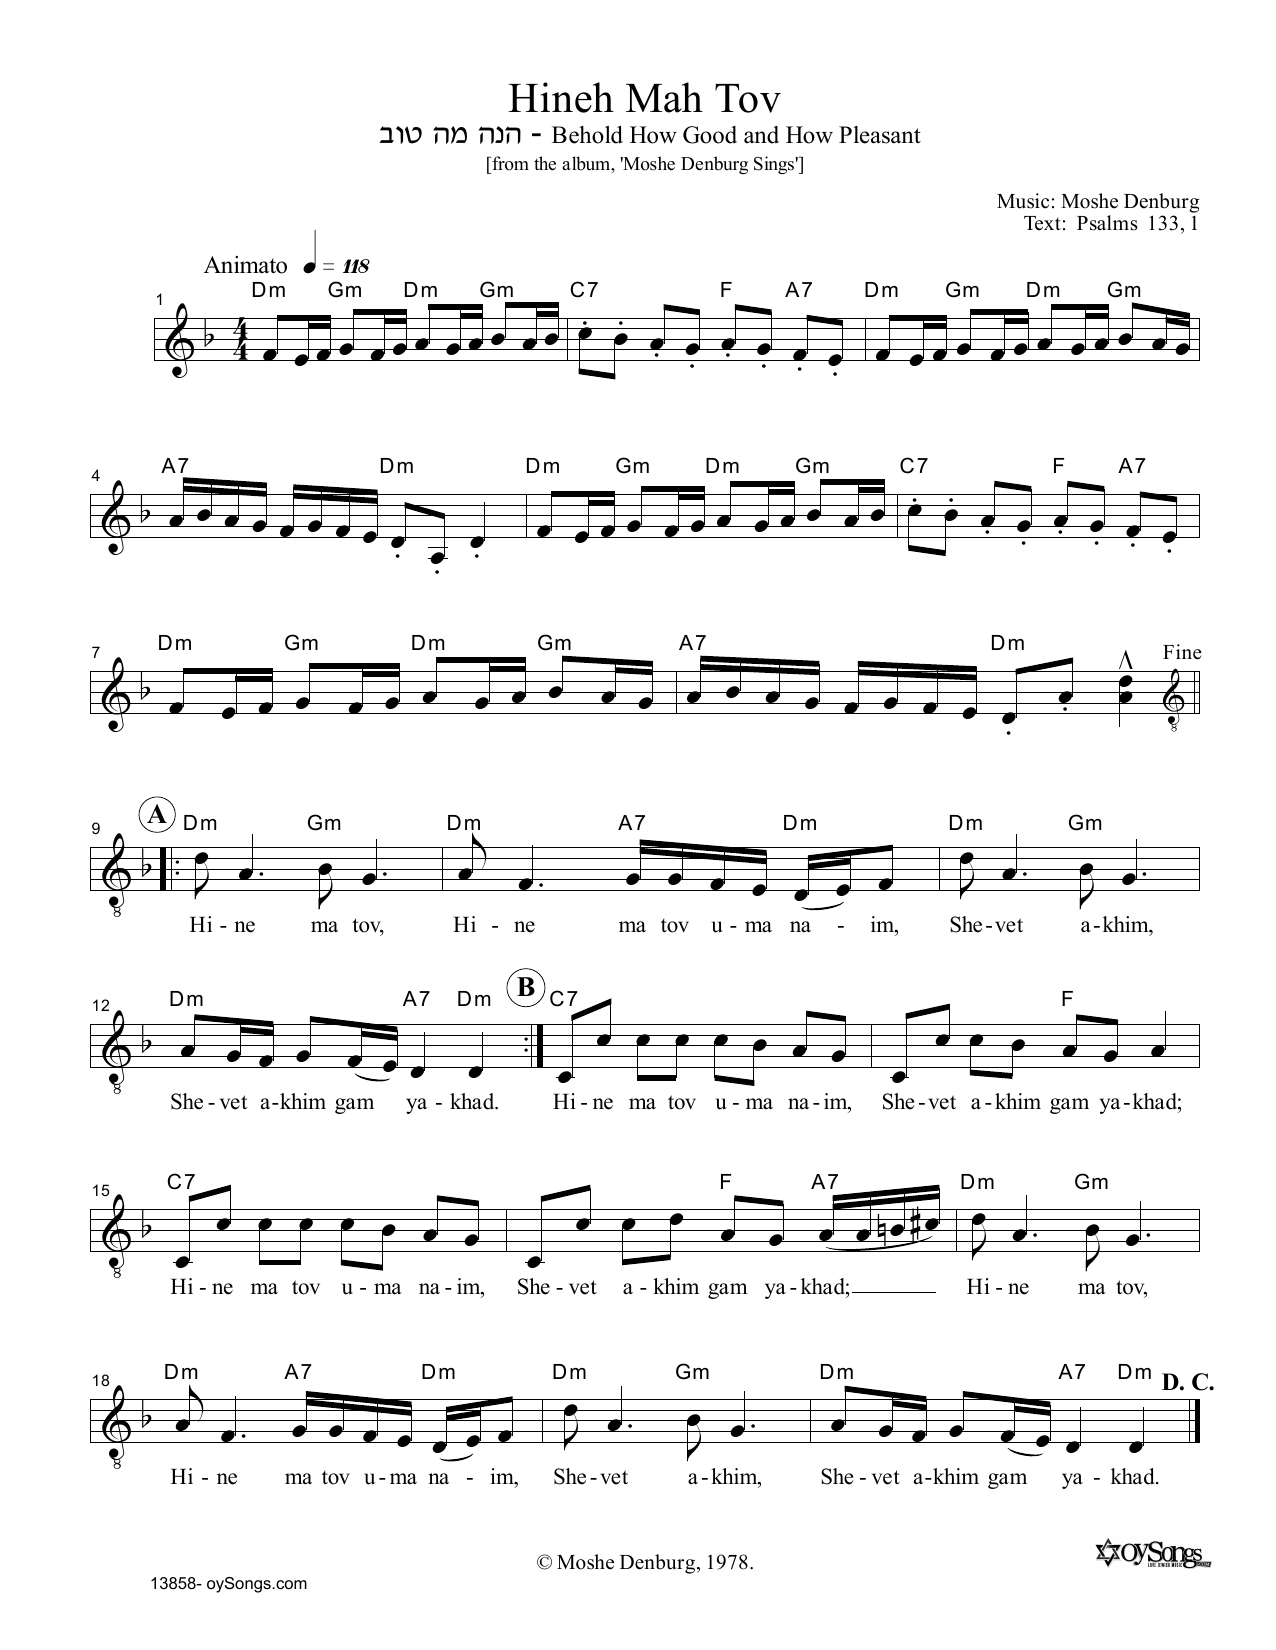 Moshe Denburg Hineh Mah Tov Sheet Music Notes & Chords for Melody Line, Lyrics & Chords - Download or Print PDF